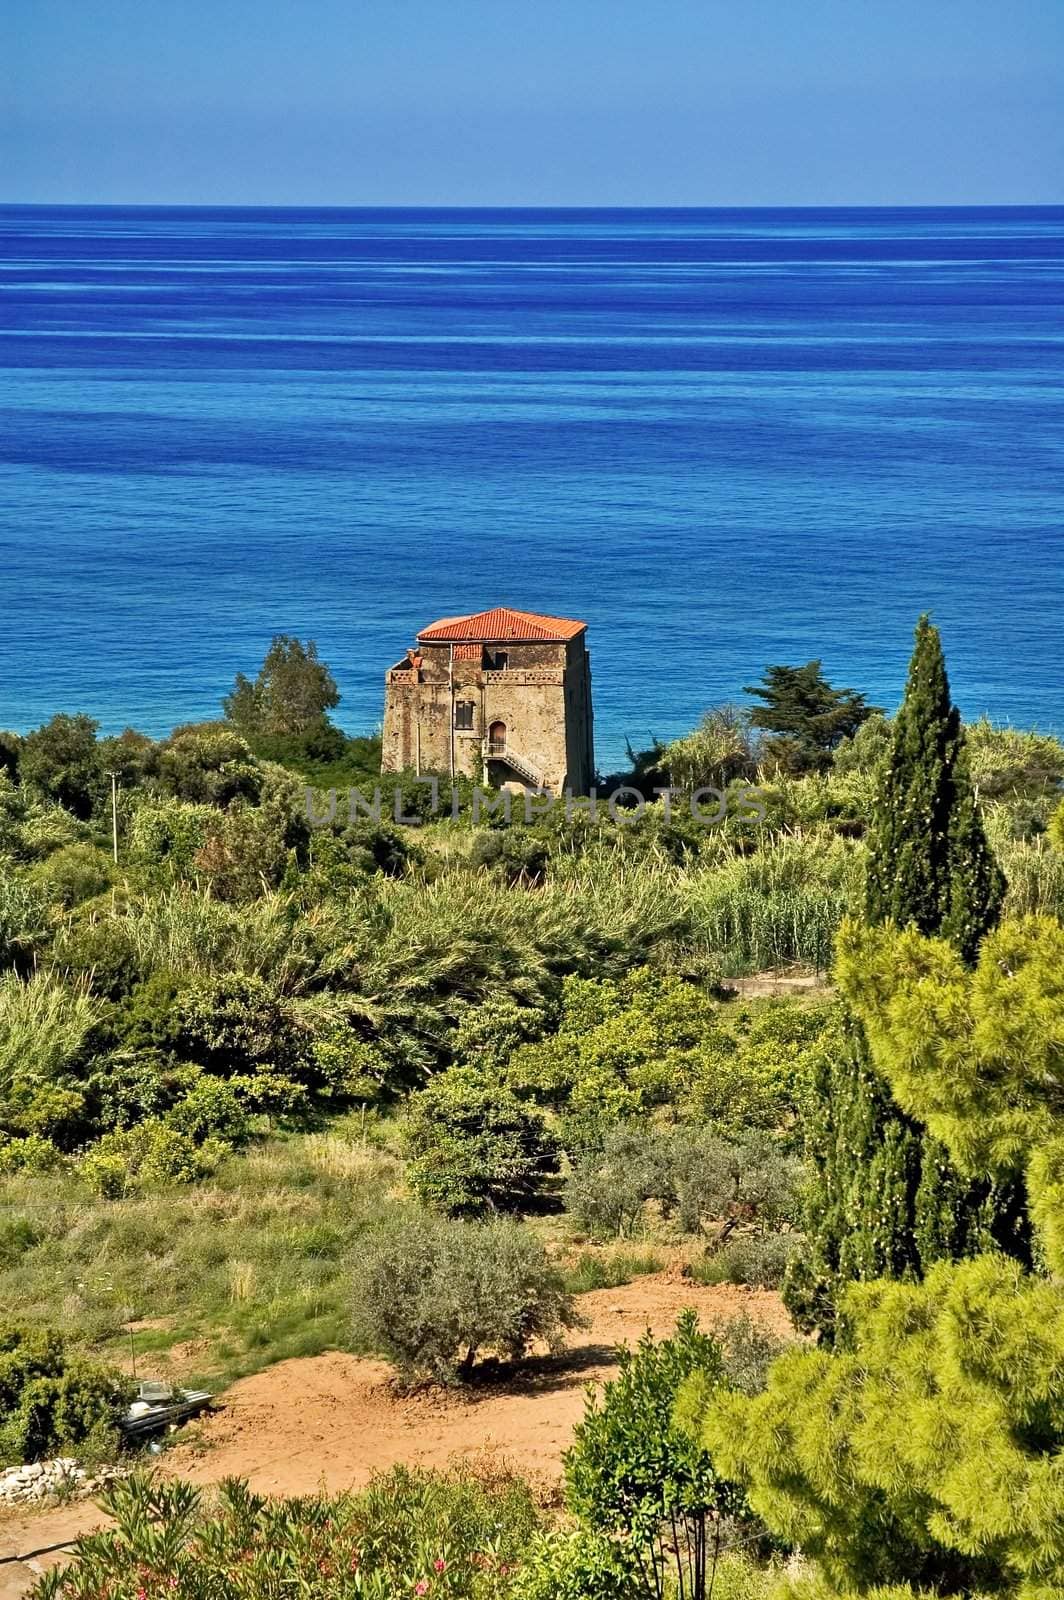 Old house in Italian garden overlooking Mediterranean sea